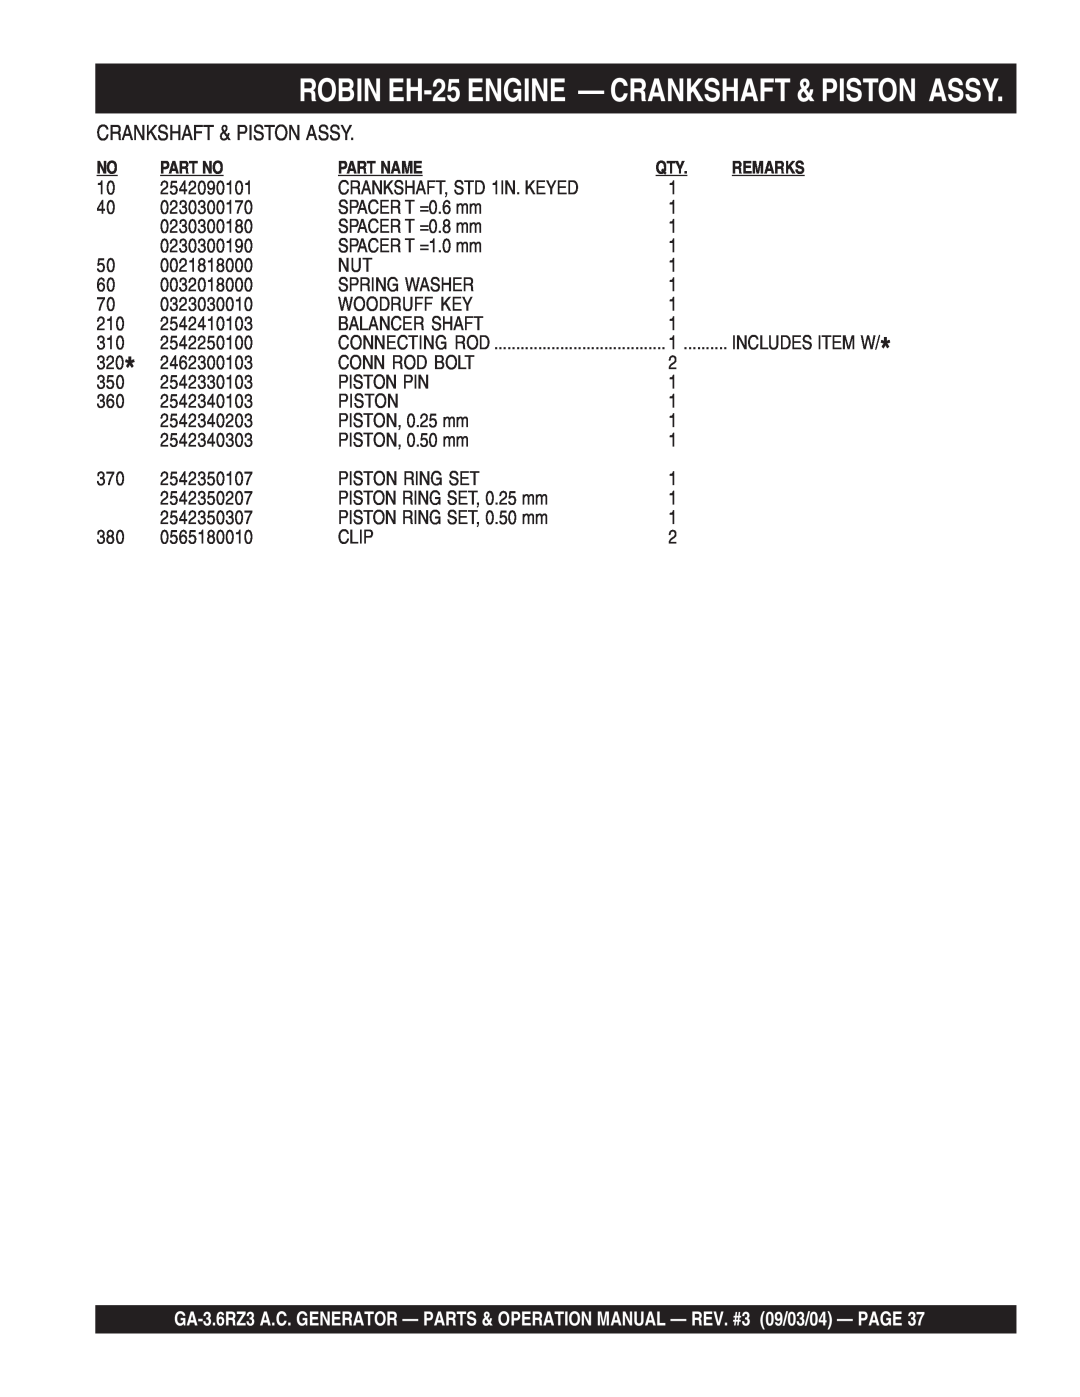 Multiquip GA-3.6RZ3 operation manual ROBIN EH-25ENGINE — CRANKSHAFT & PISTON ASSY, 2542090101 